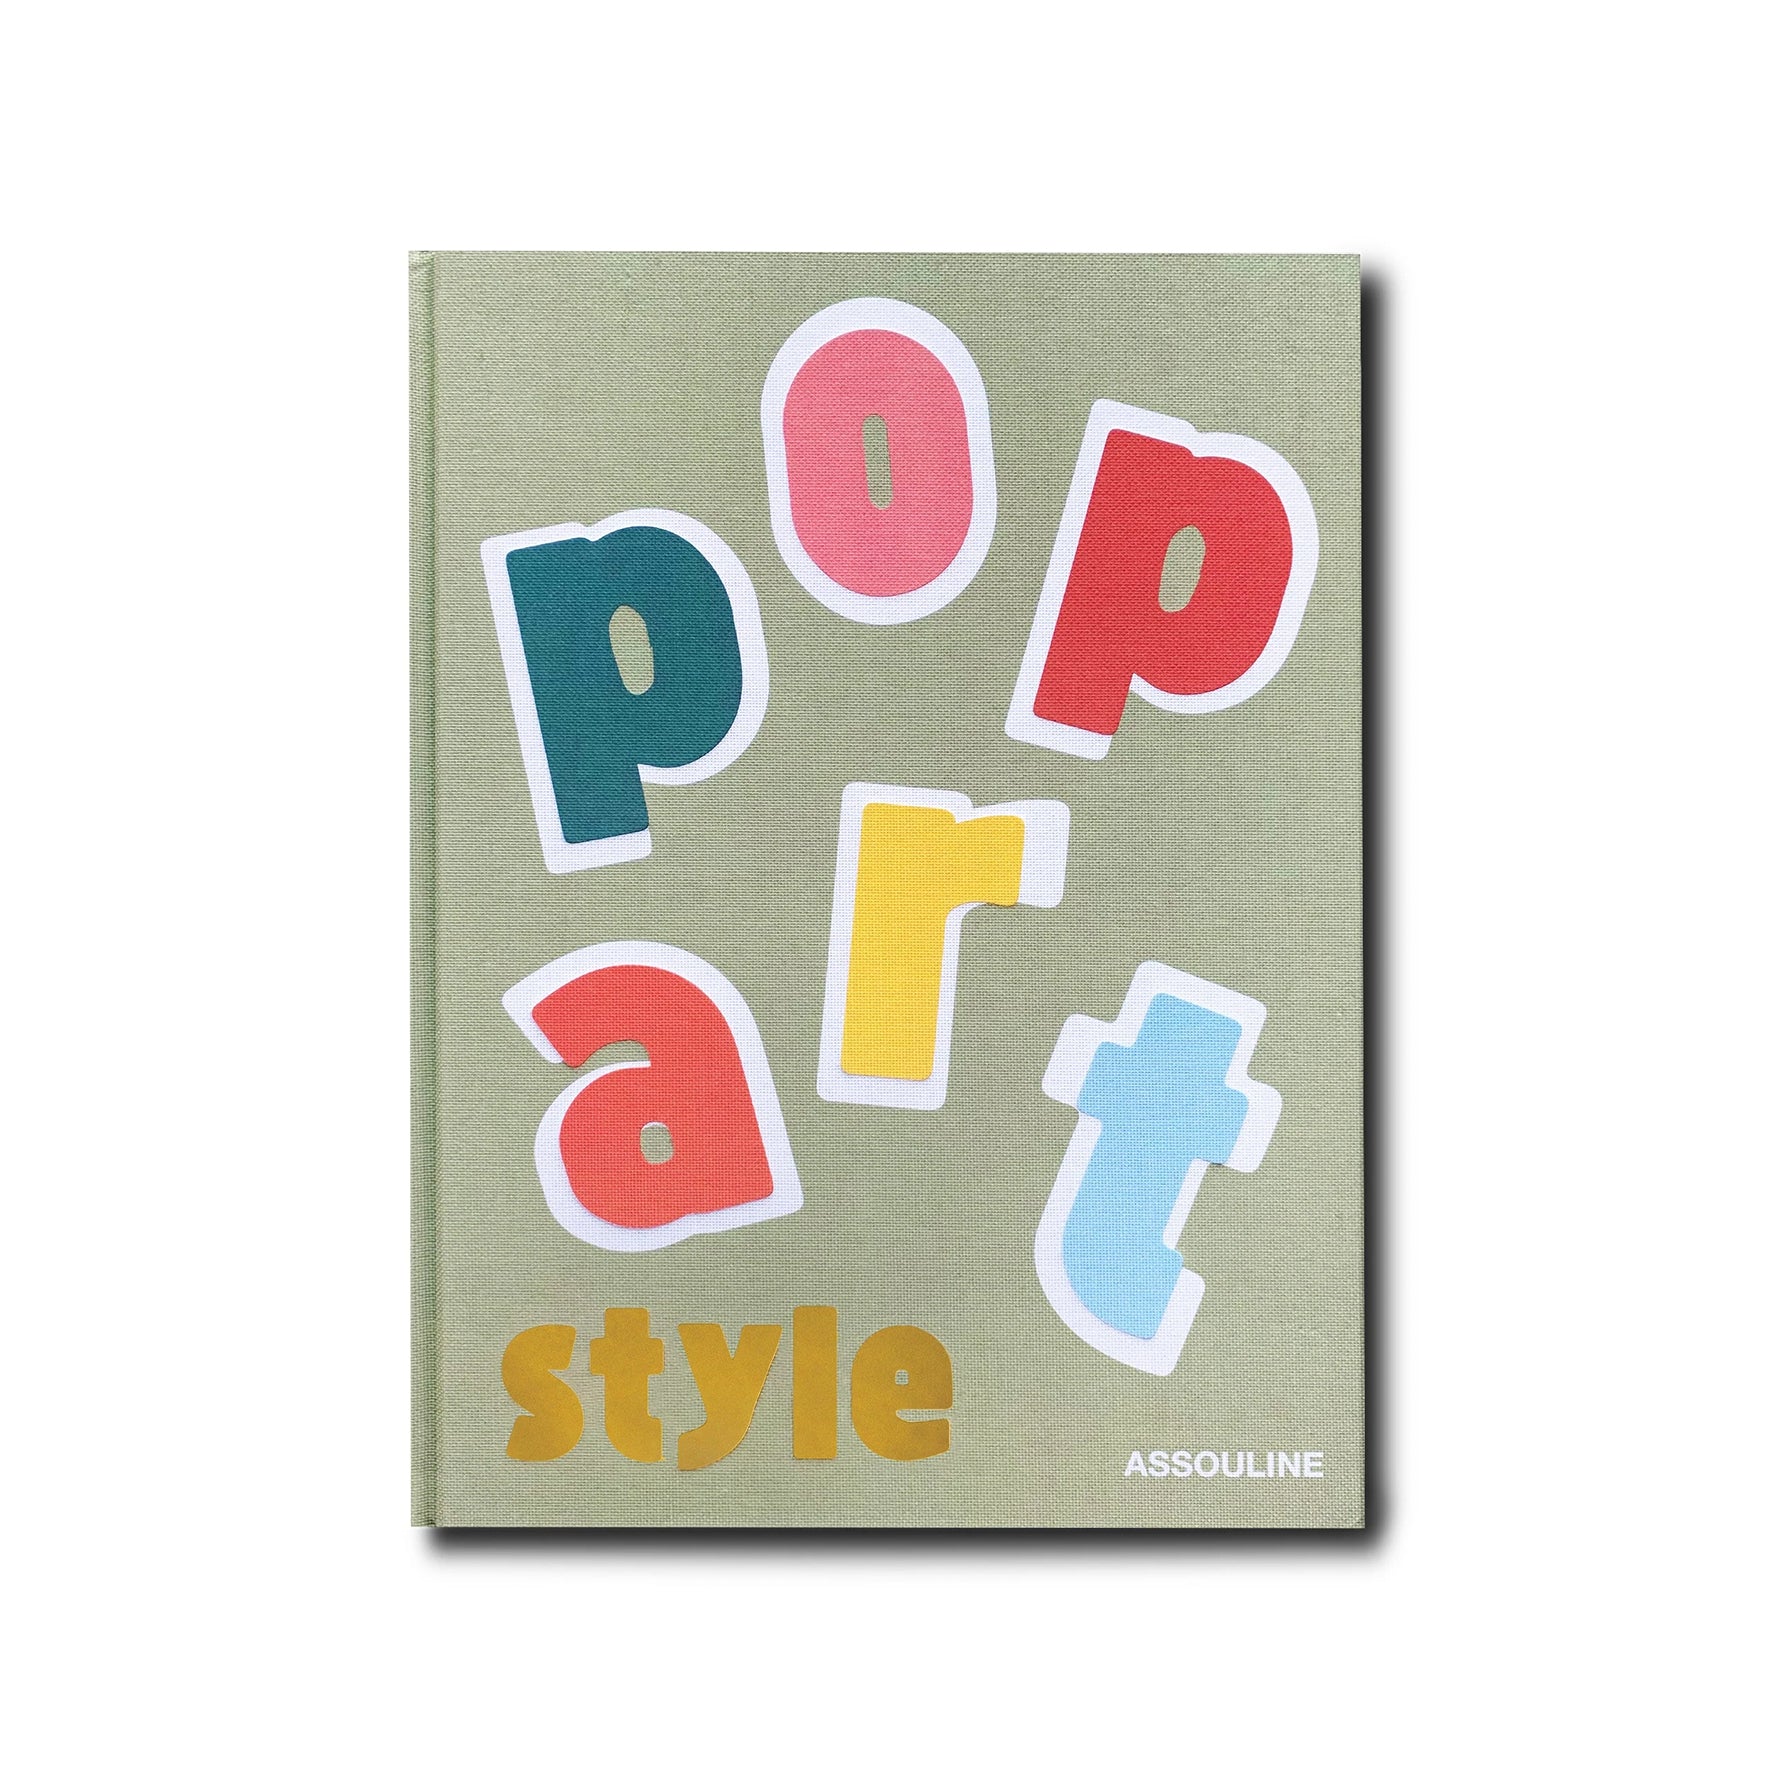 Pop Art Style by Assouline